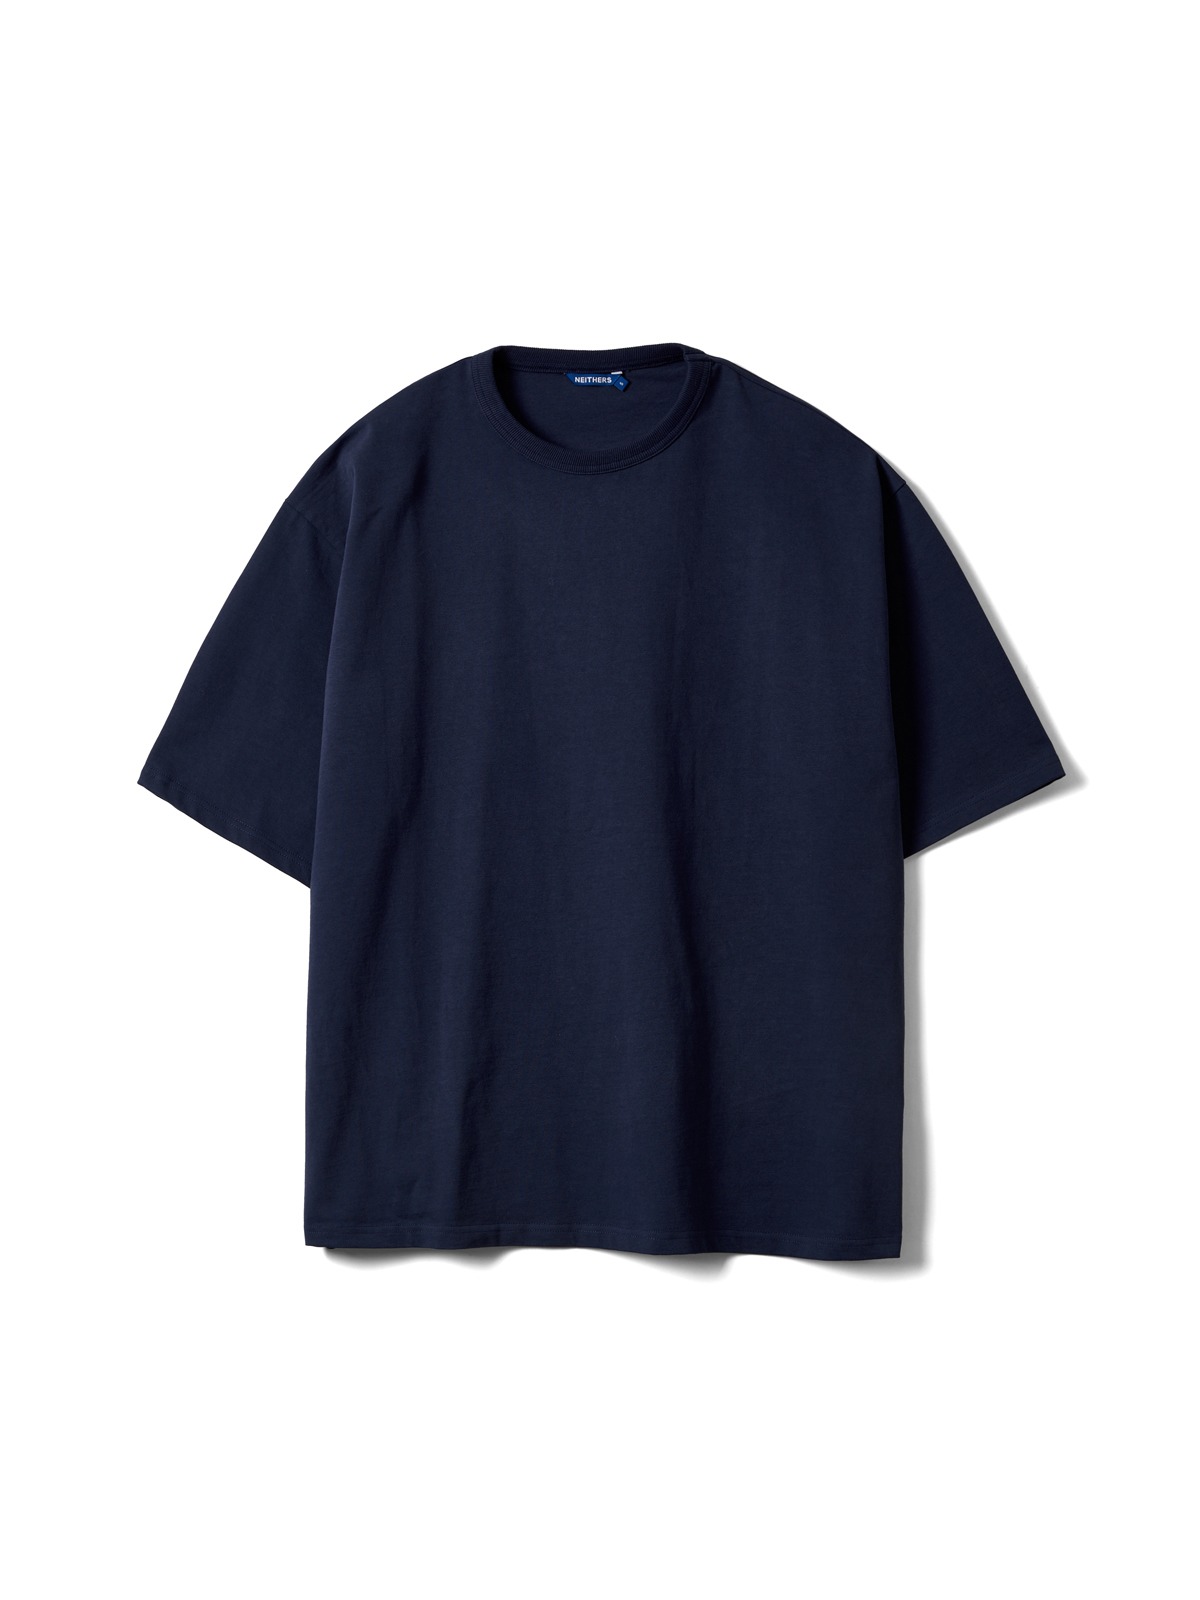 Wide S/S T-Shirt (Navy)